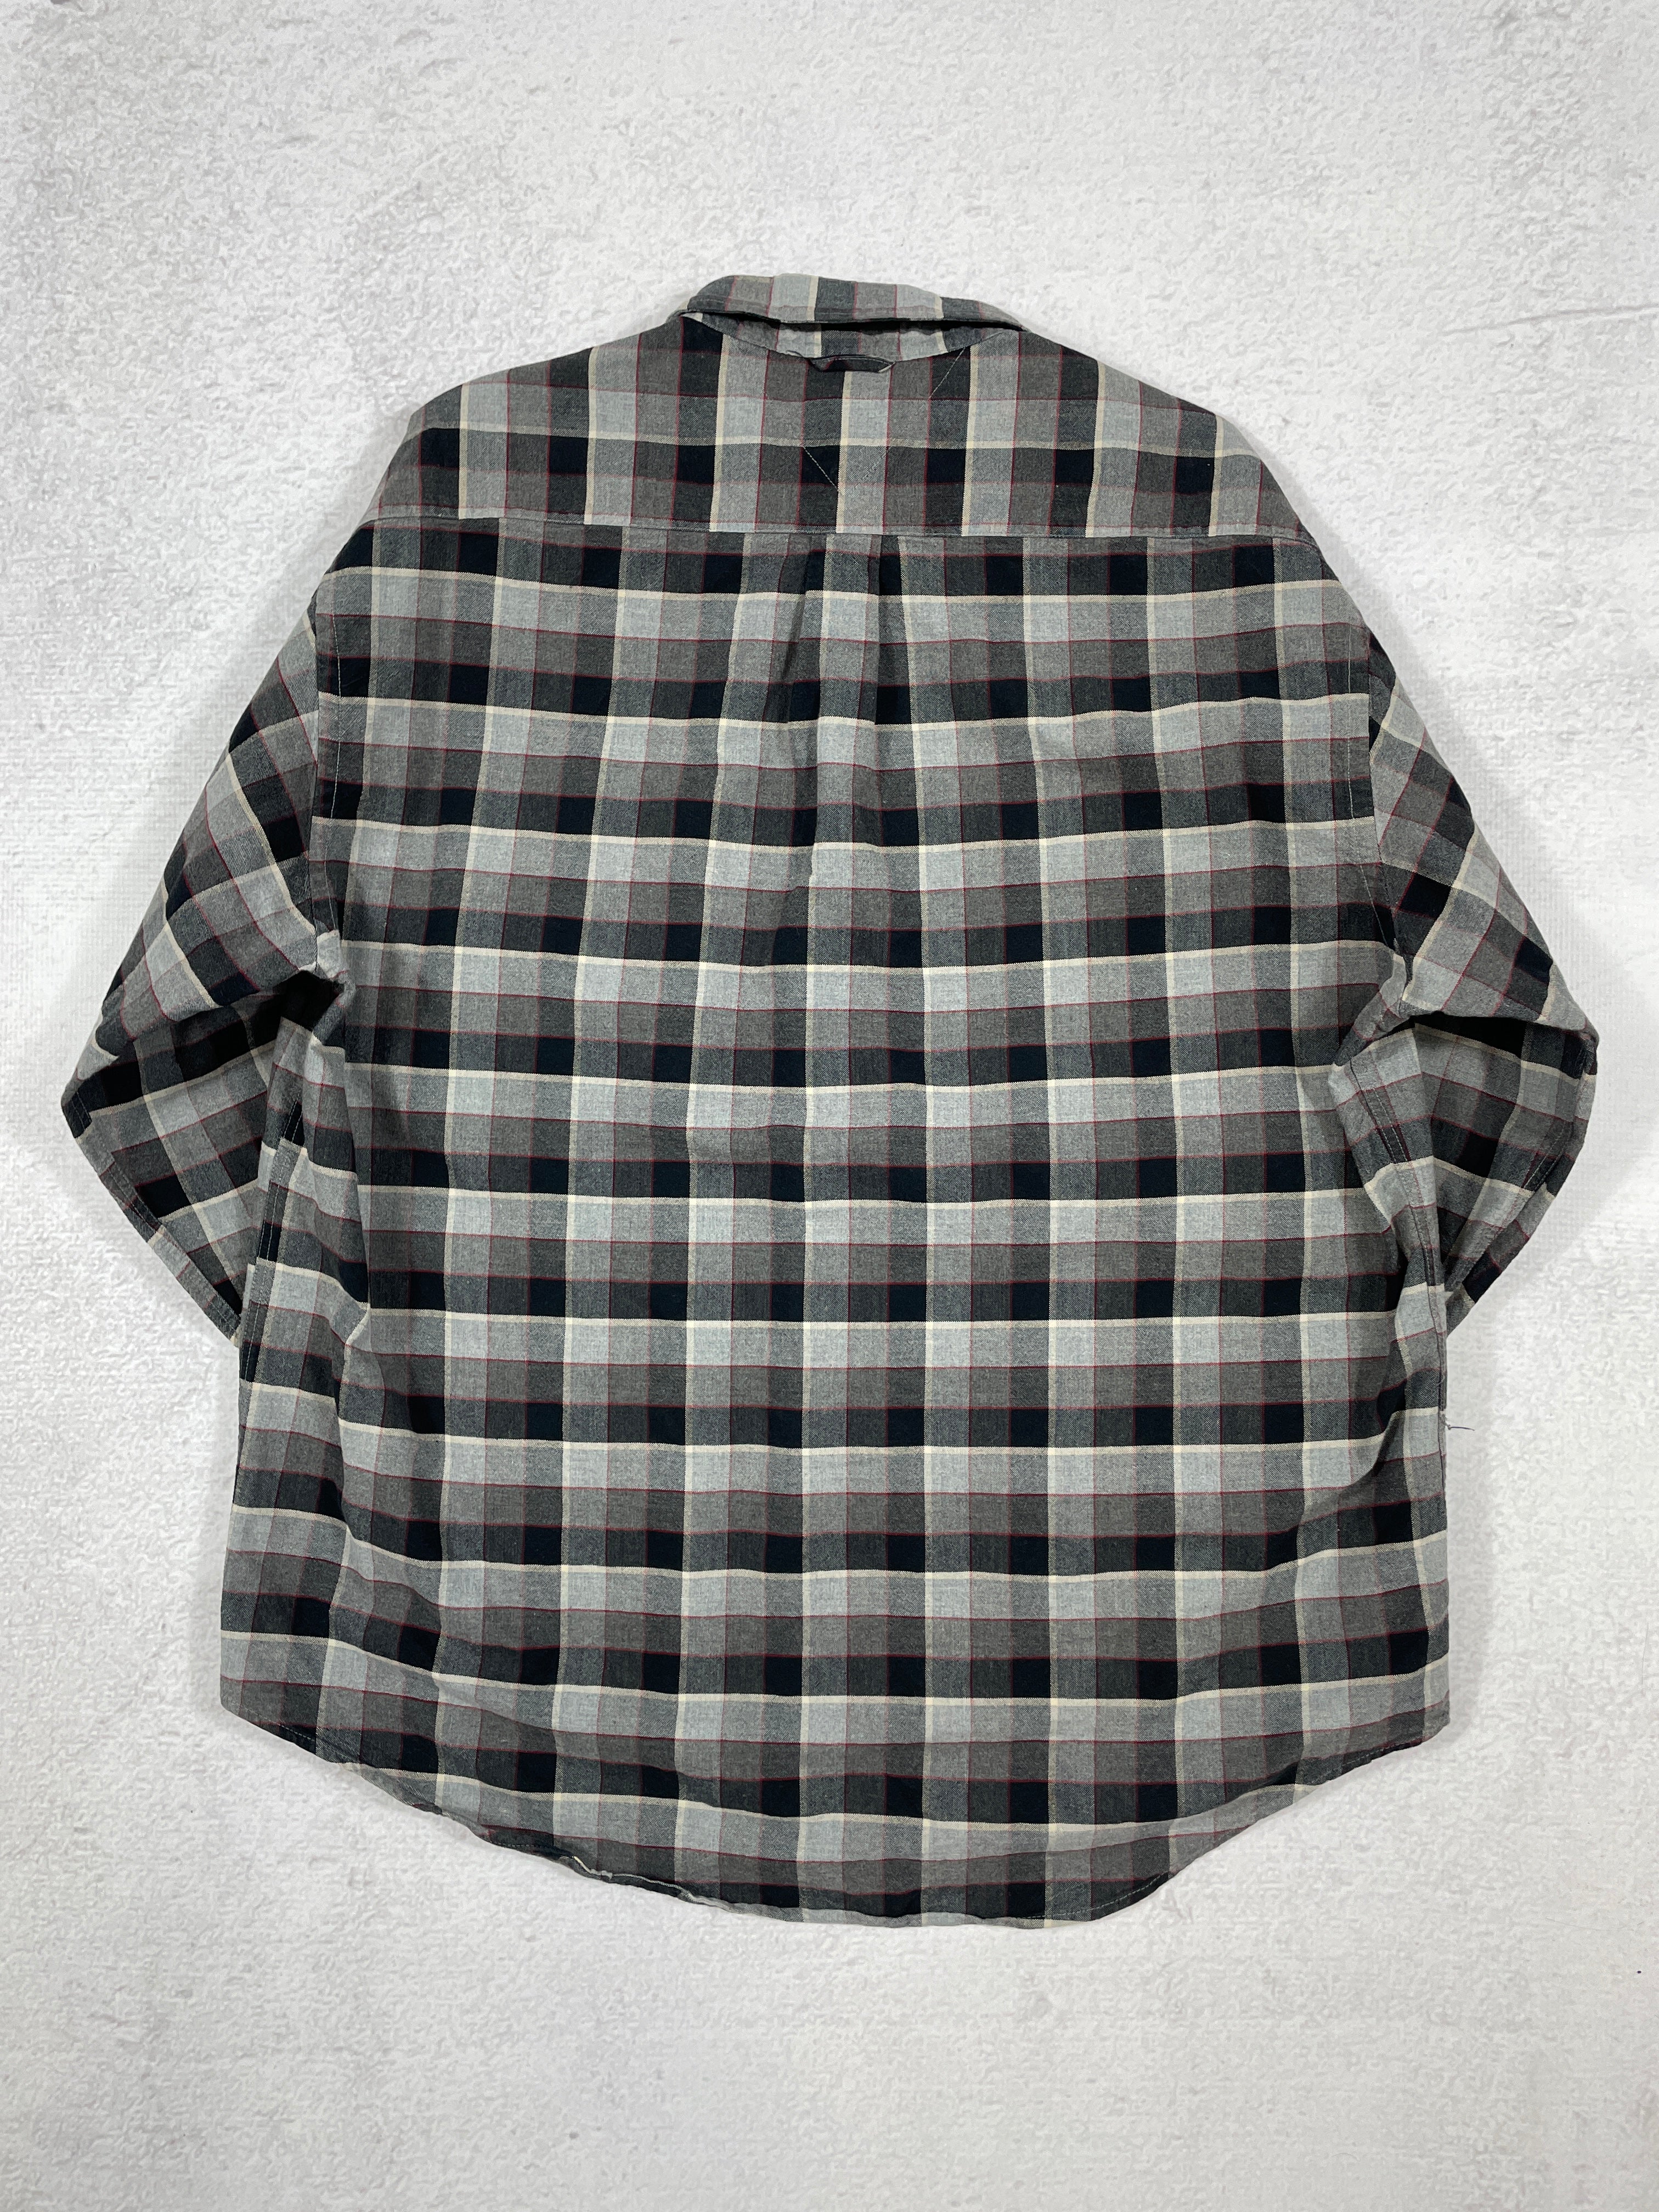 Vintage Tommy Hilfiger Flannel Buttoned Shirt - Men's XL